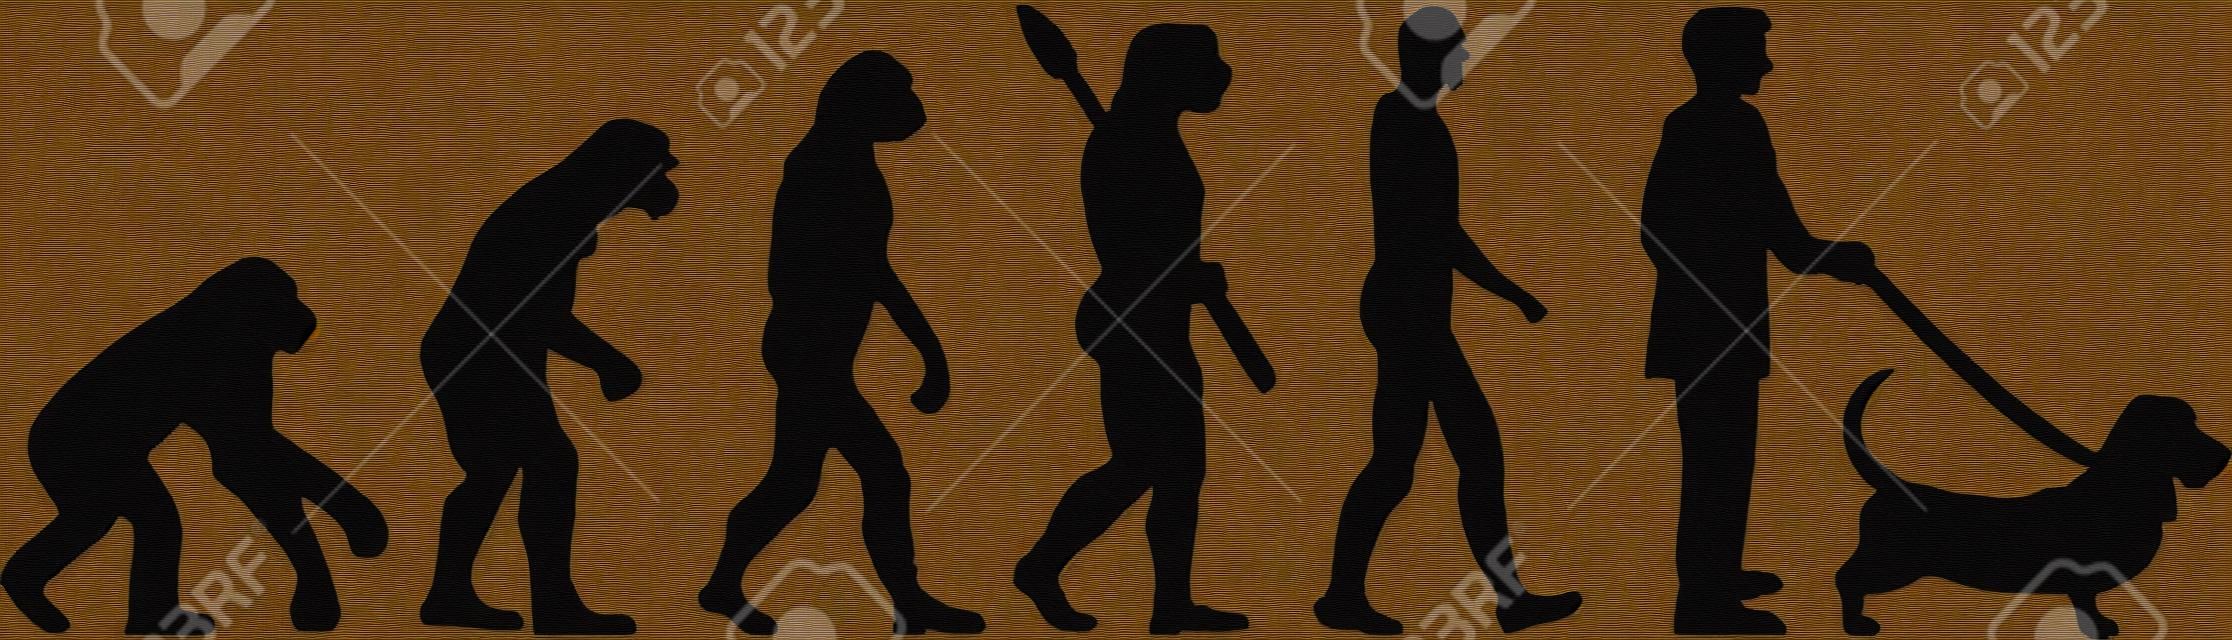 Basset hound evolution with silhouette illustration.